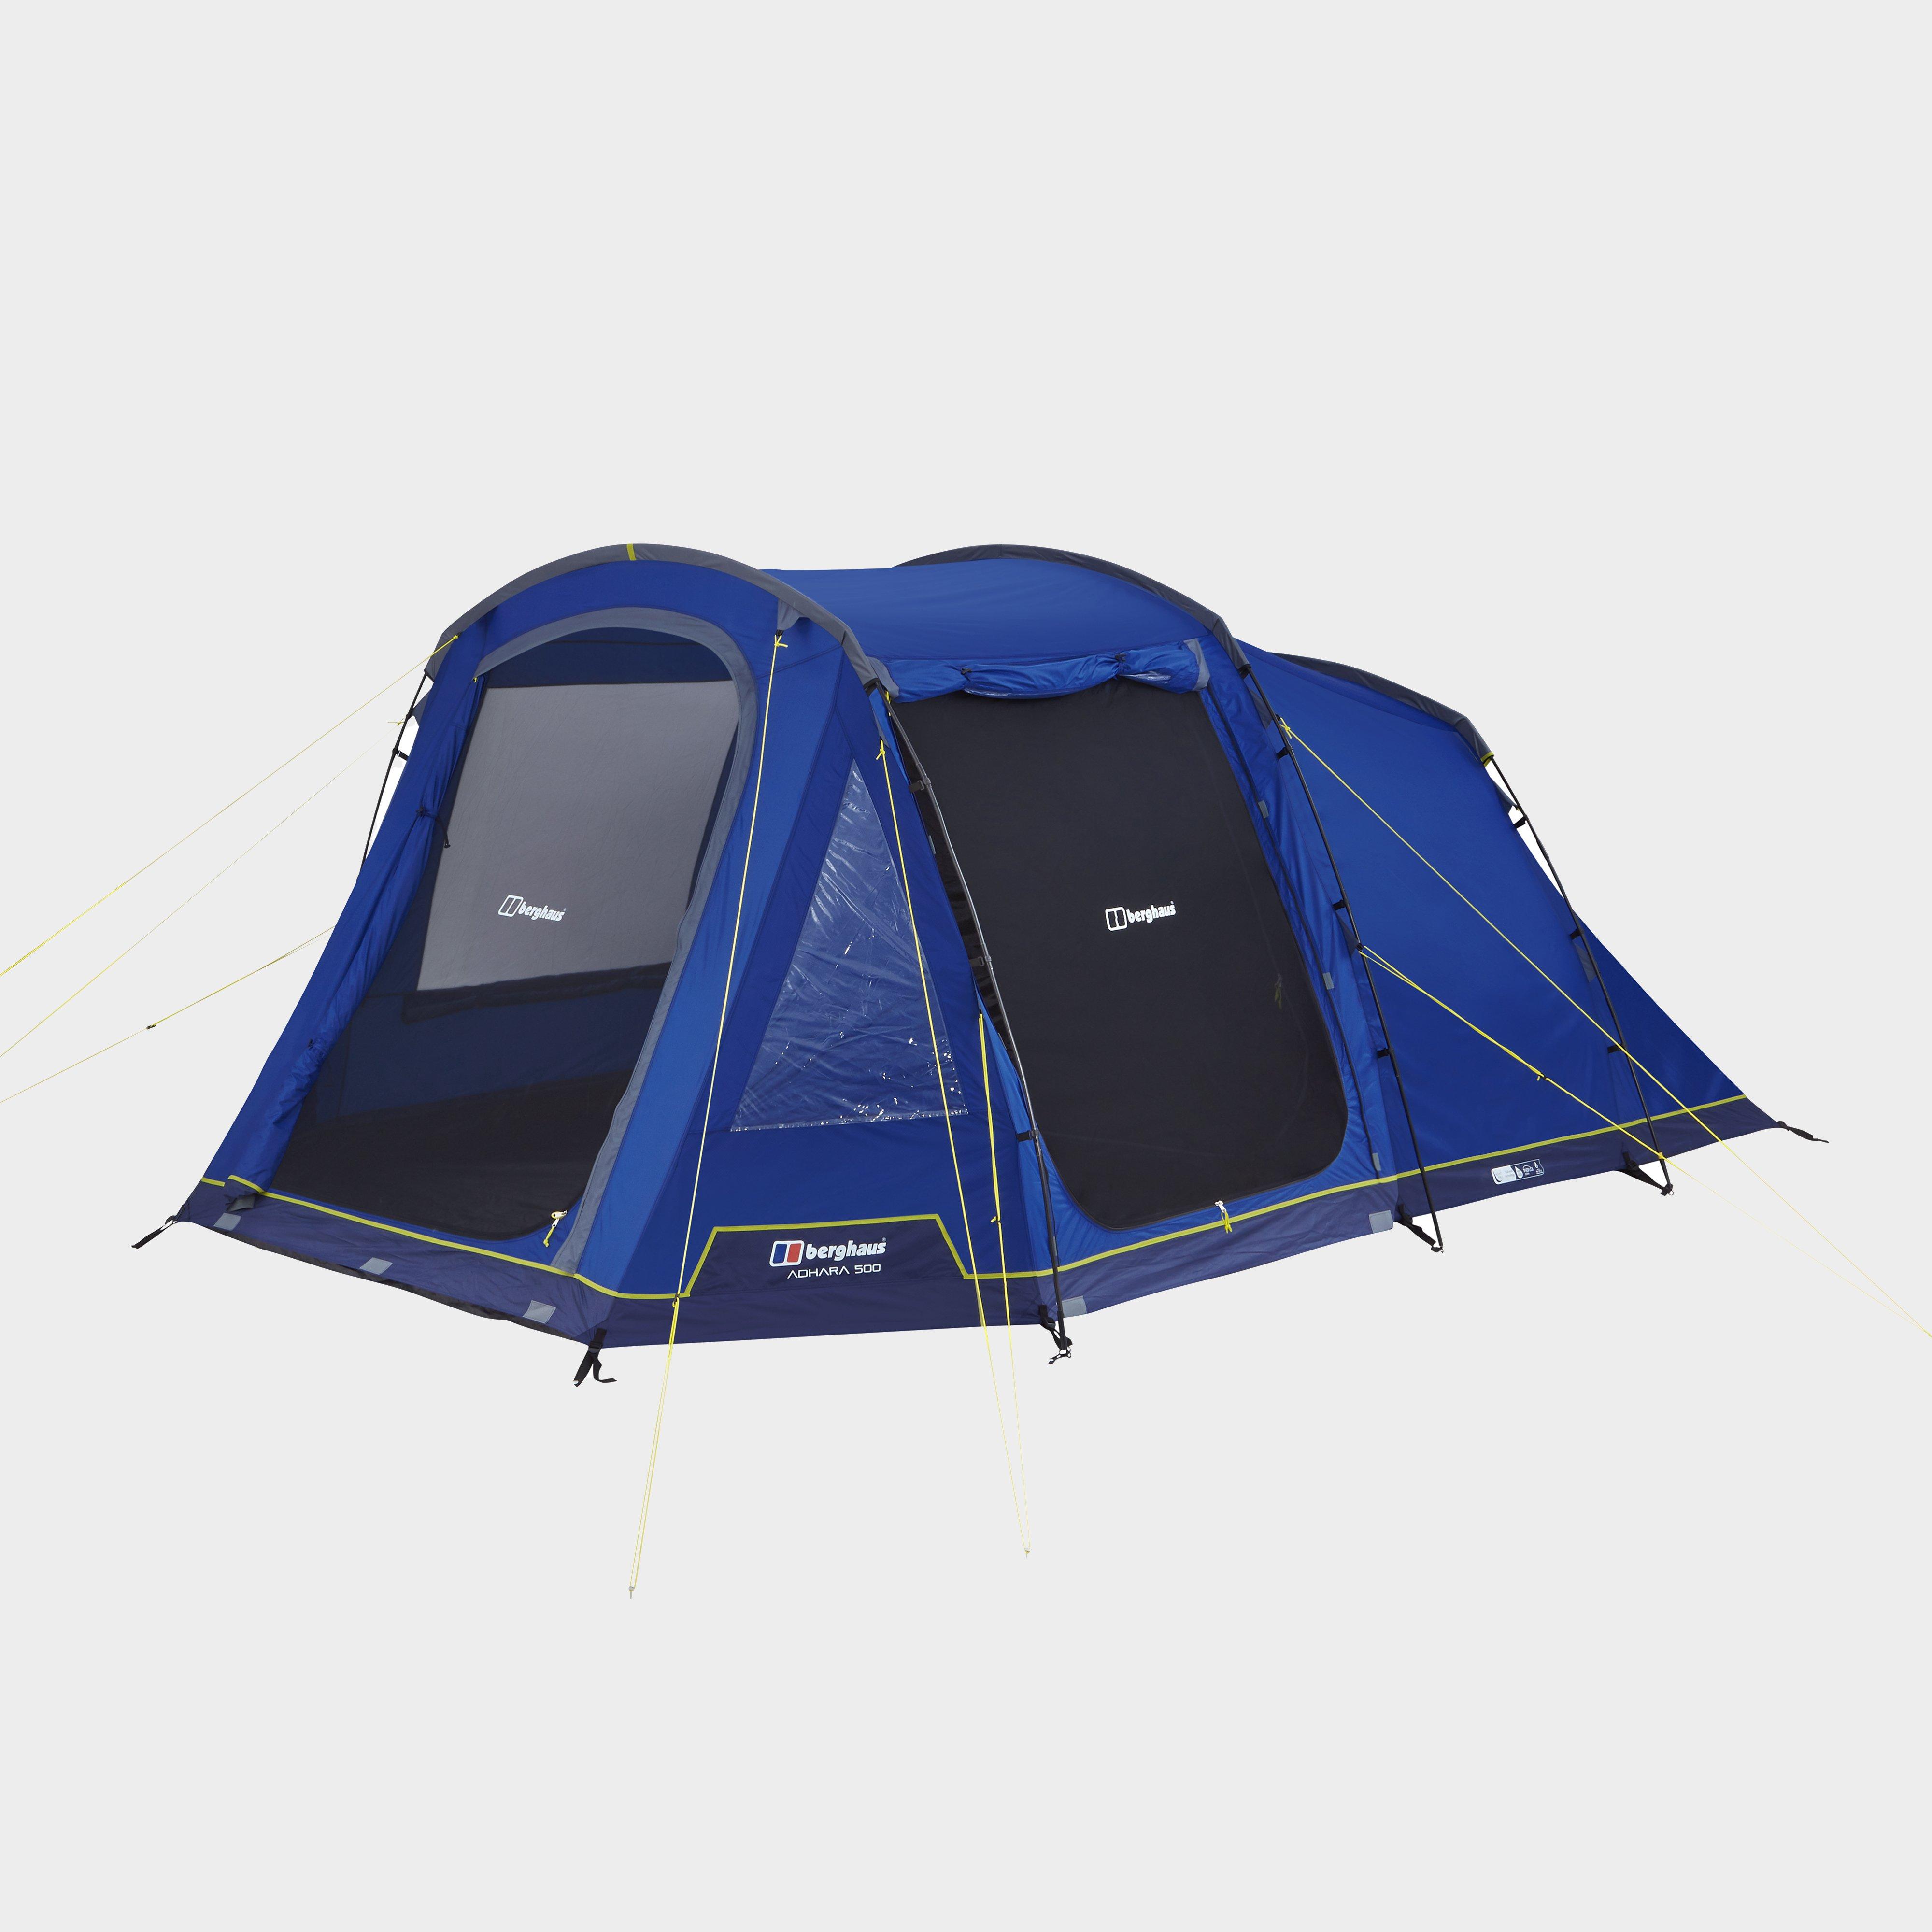 Adhara 500 Nightfall® Tent - Blue, Blue